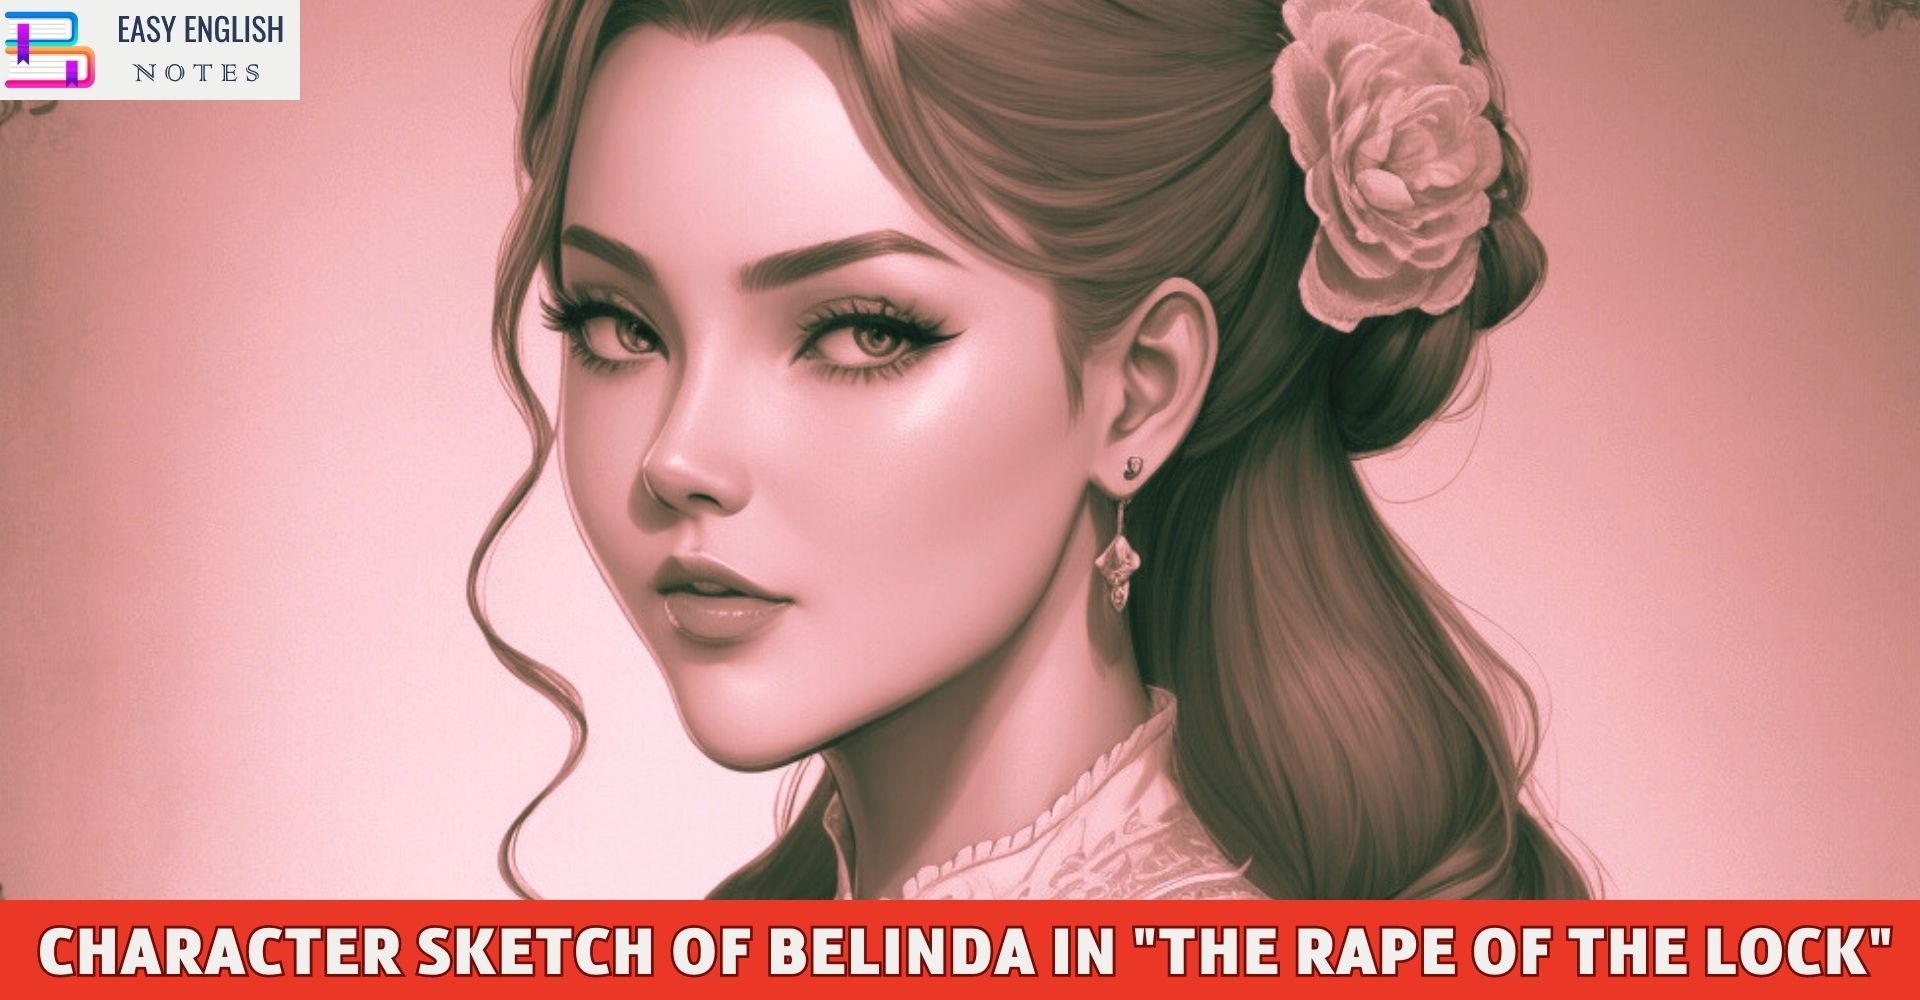 Character Sketch Of Belinda In "The Rape of the Lock"